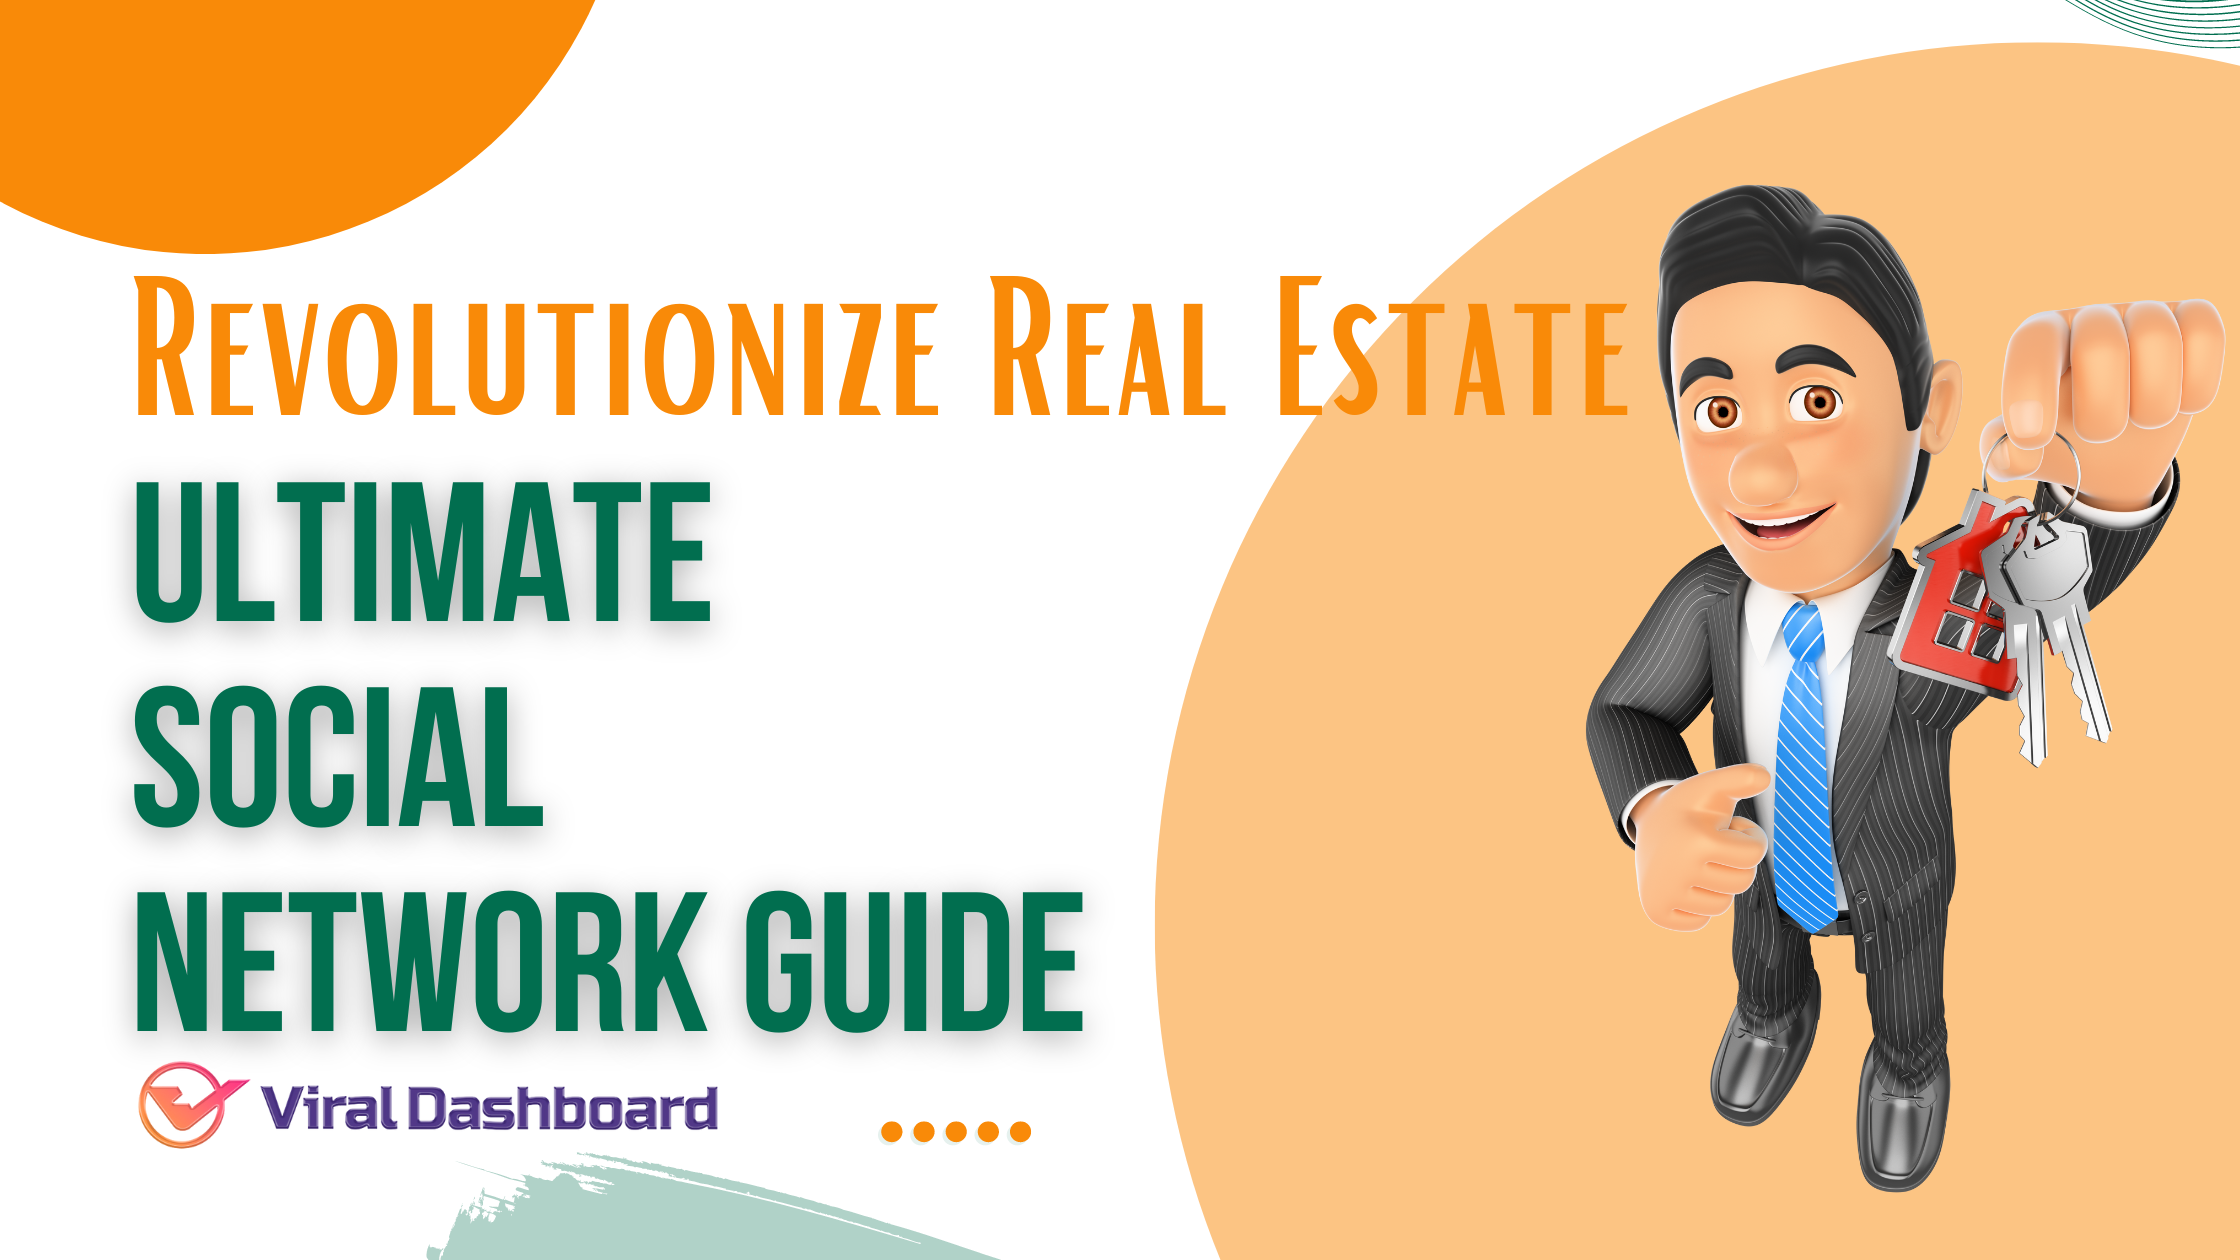 Revolutionize Real Estate: Ultimate Social Network Guide